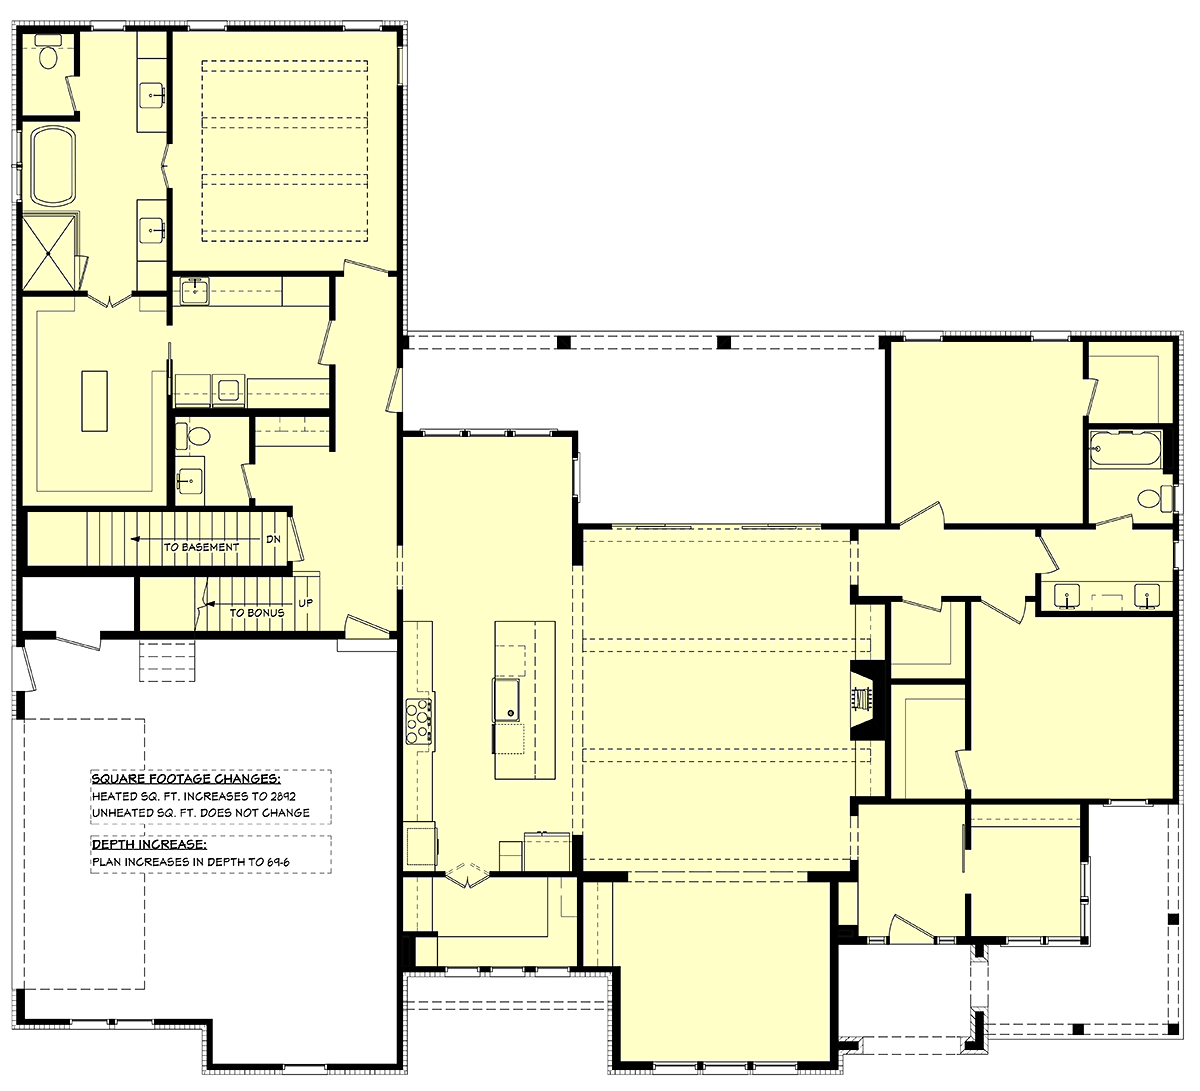 House Plan 80844 Alternate Level One